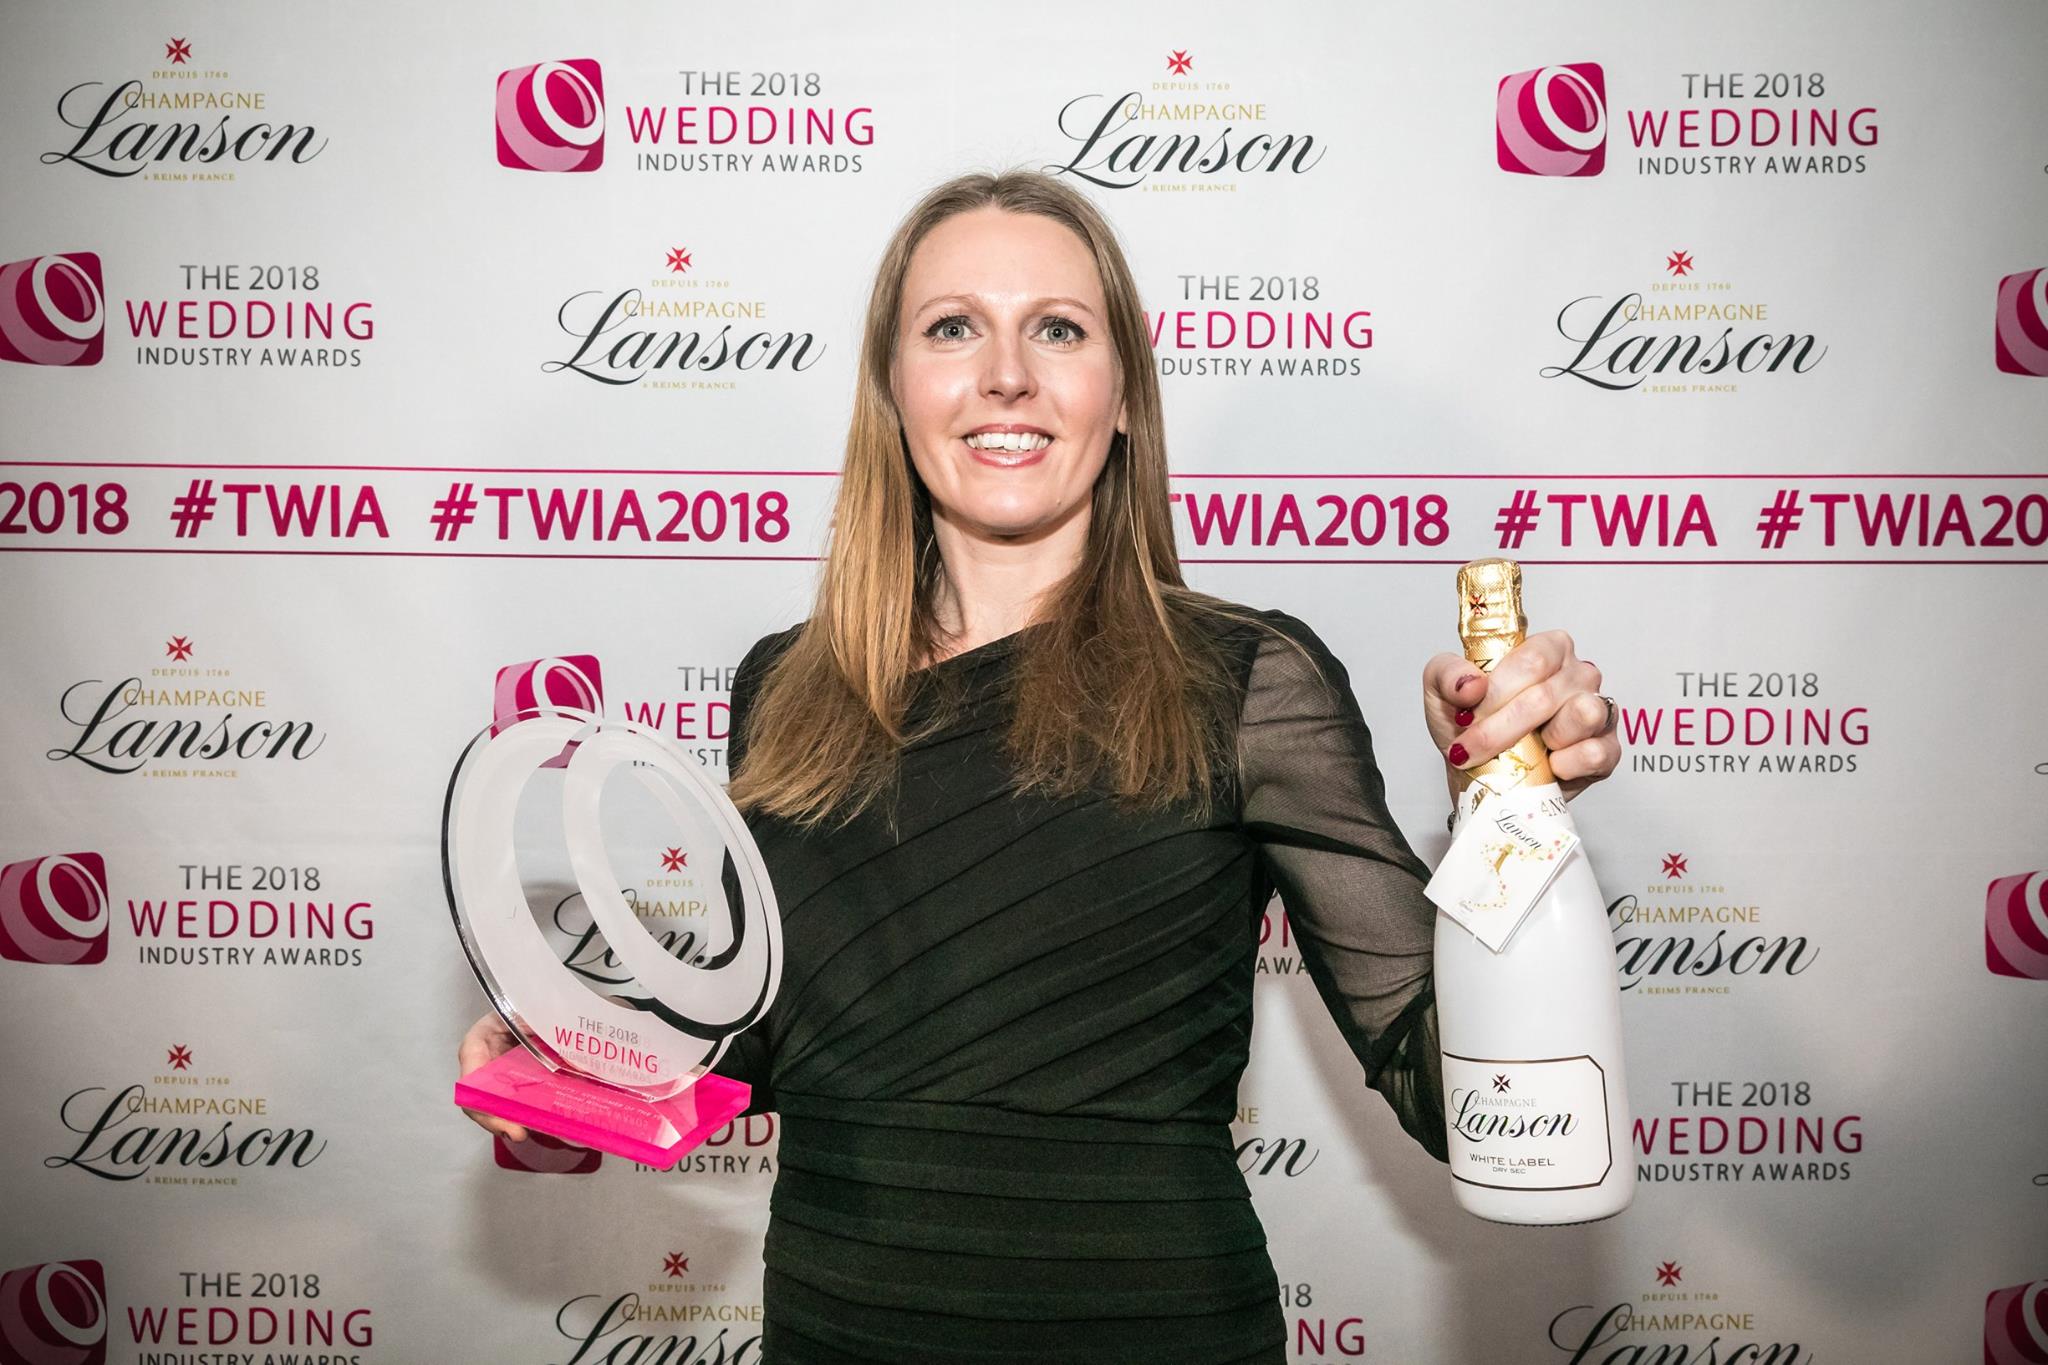 wedding industry awards, TWIA, best newcomer, 2018 wedding